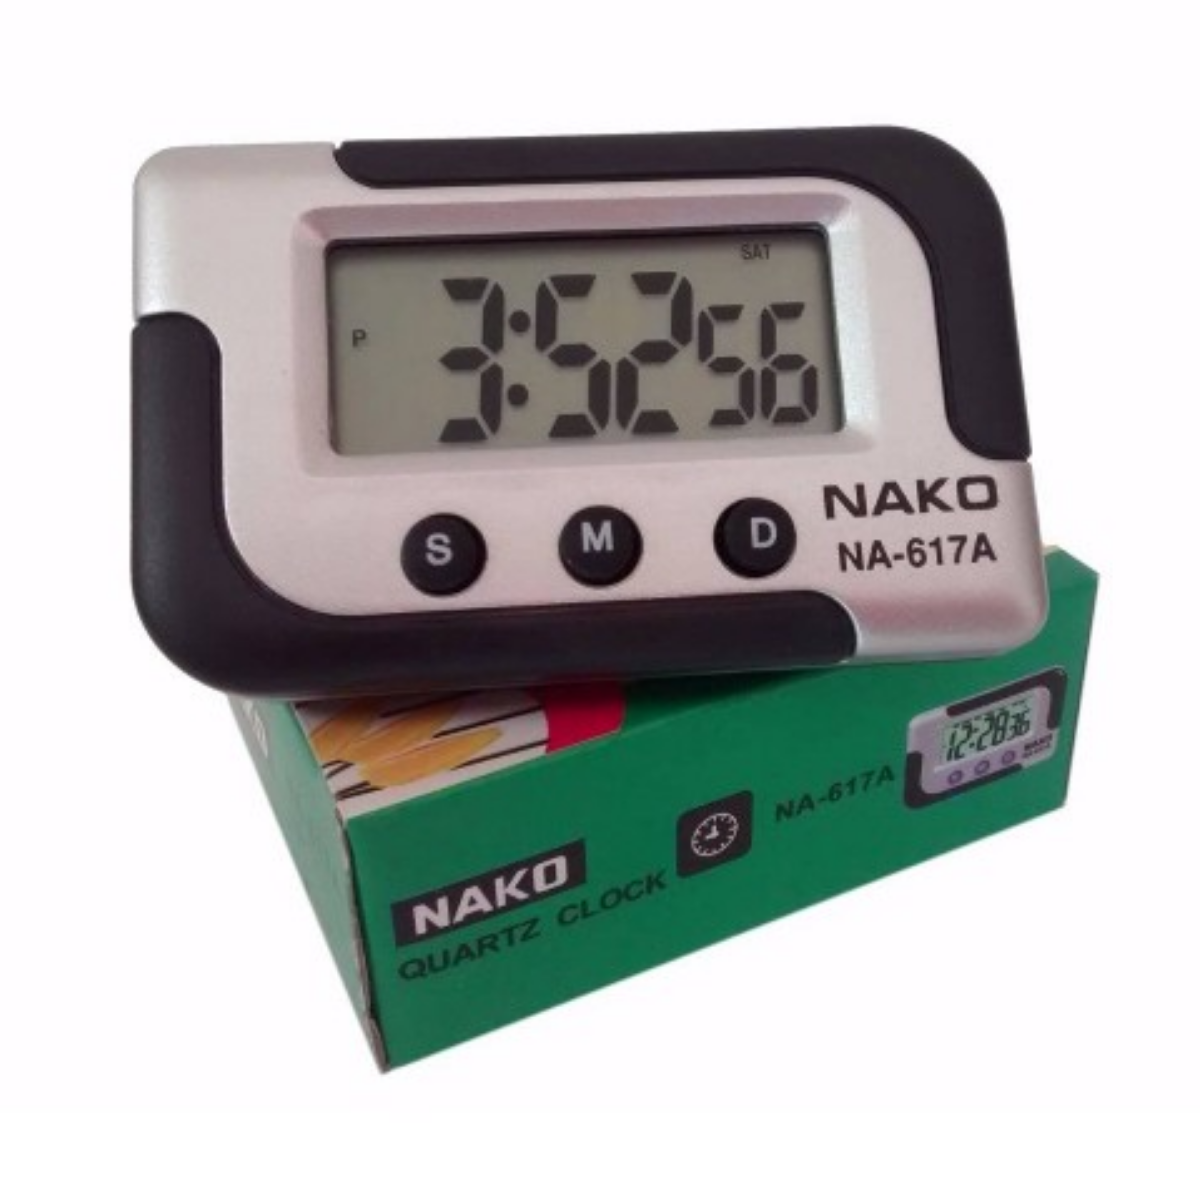 Часы Nako NA-617A c секундомером